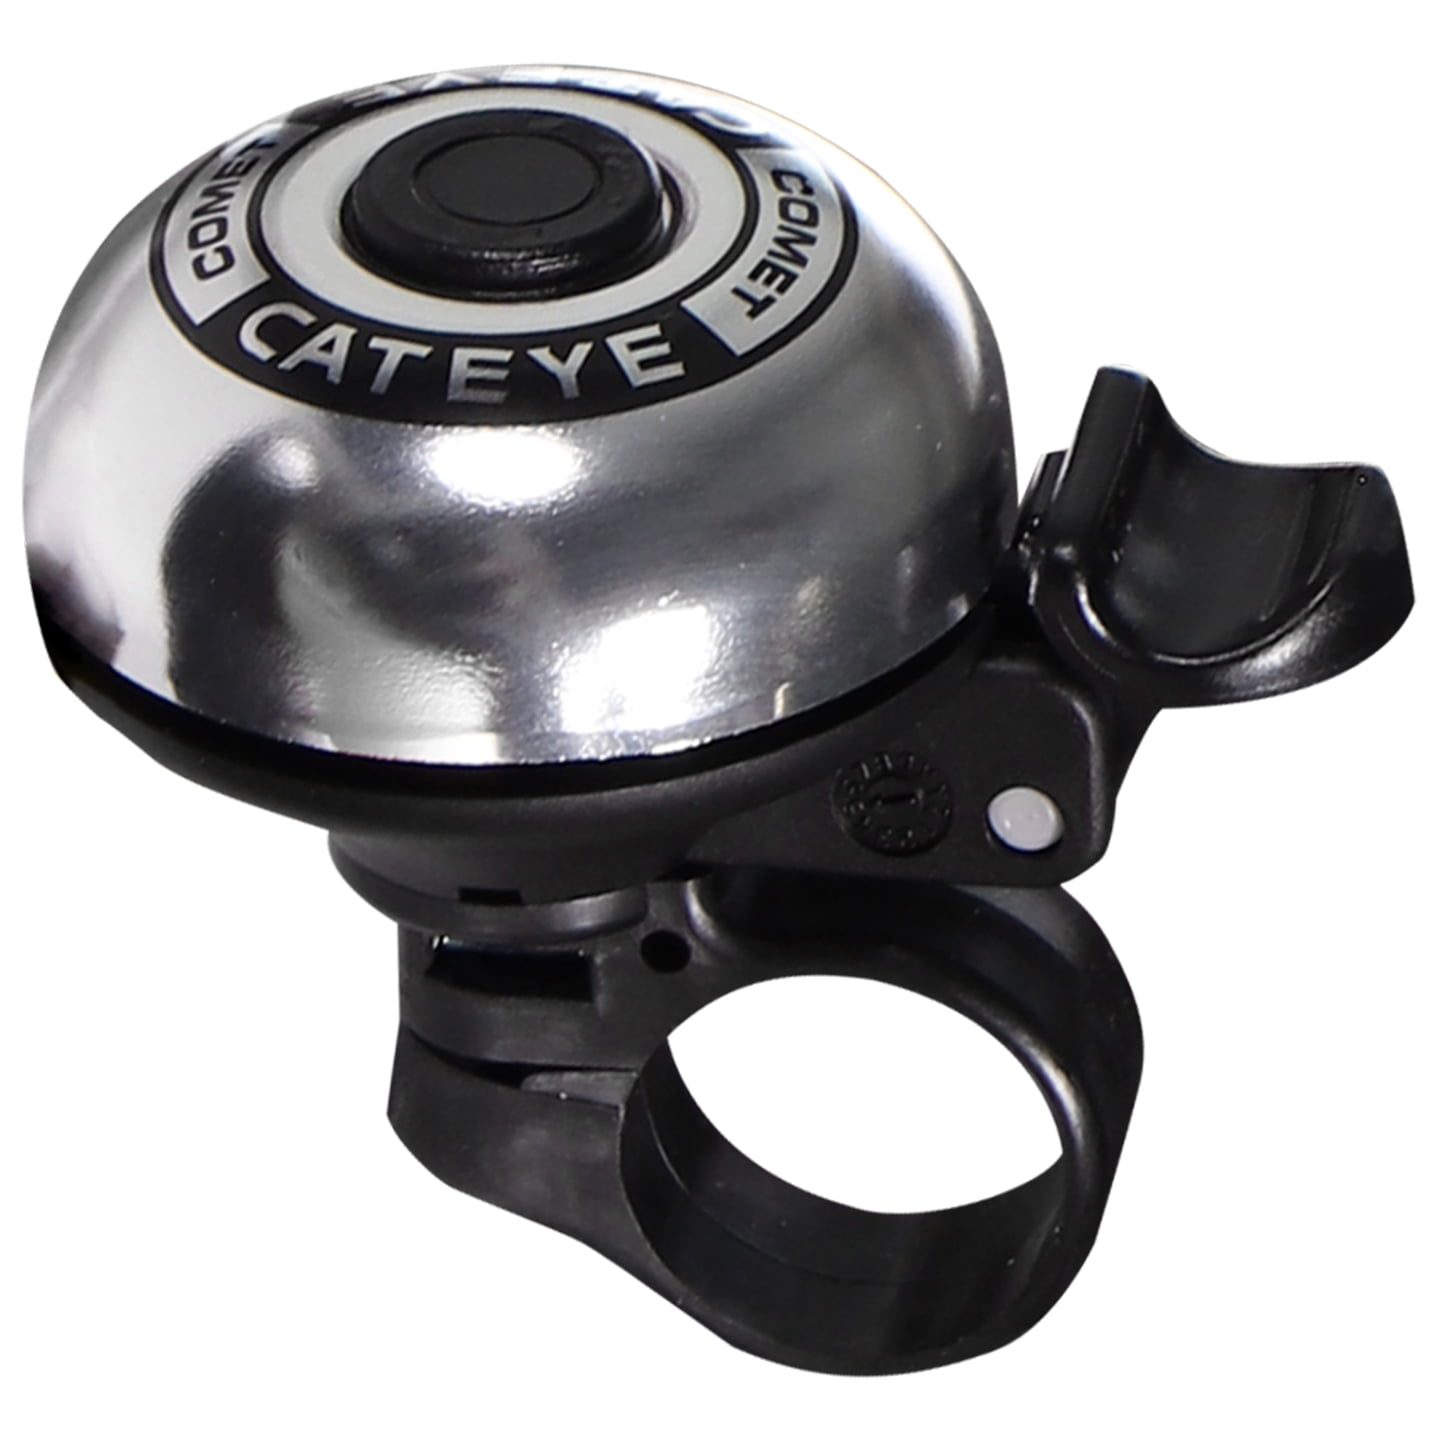 CATEYE PB-200 Comet-Bell Bicycle Bell, Bike accessories